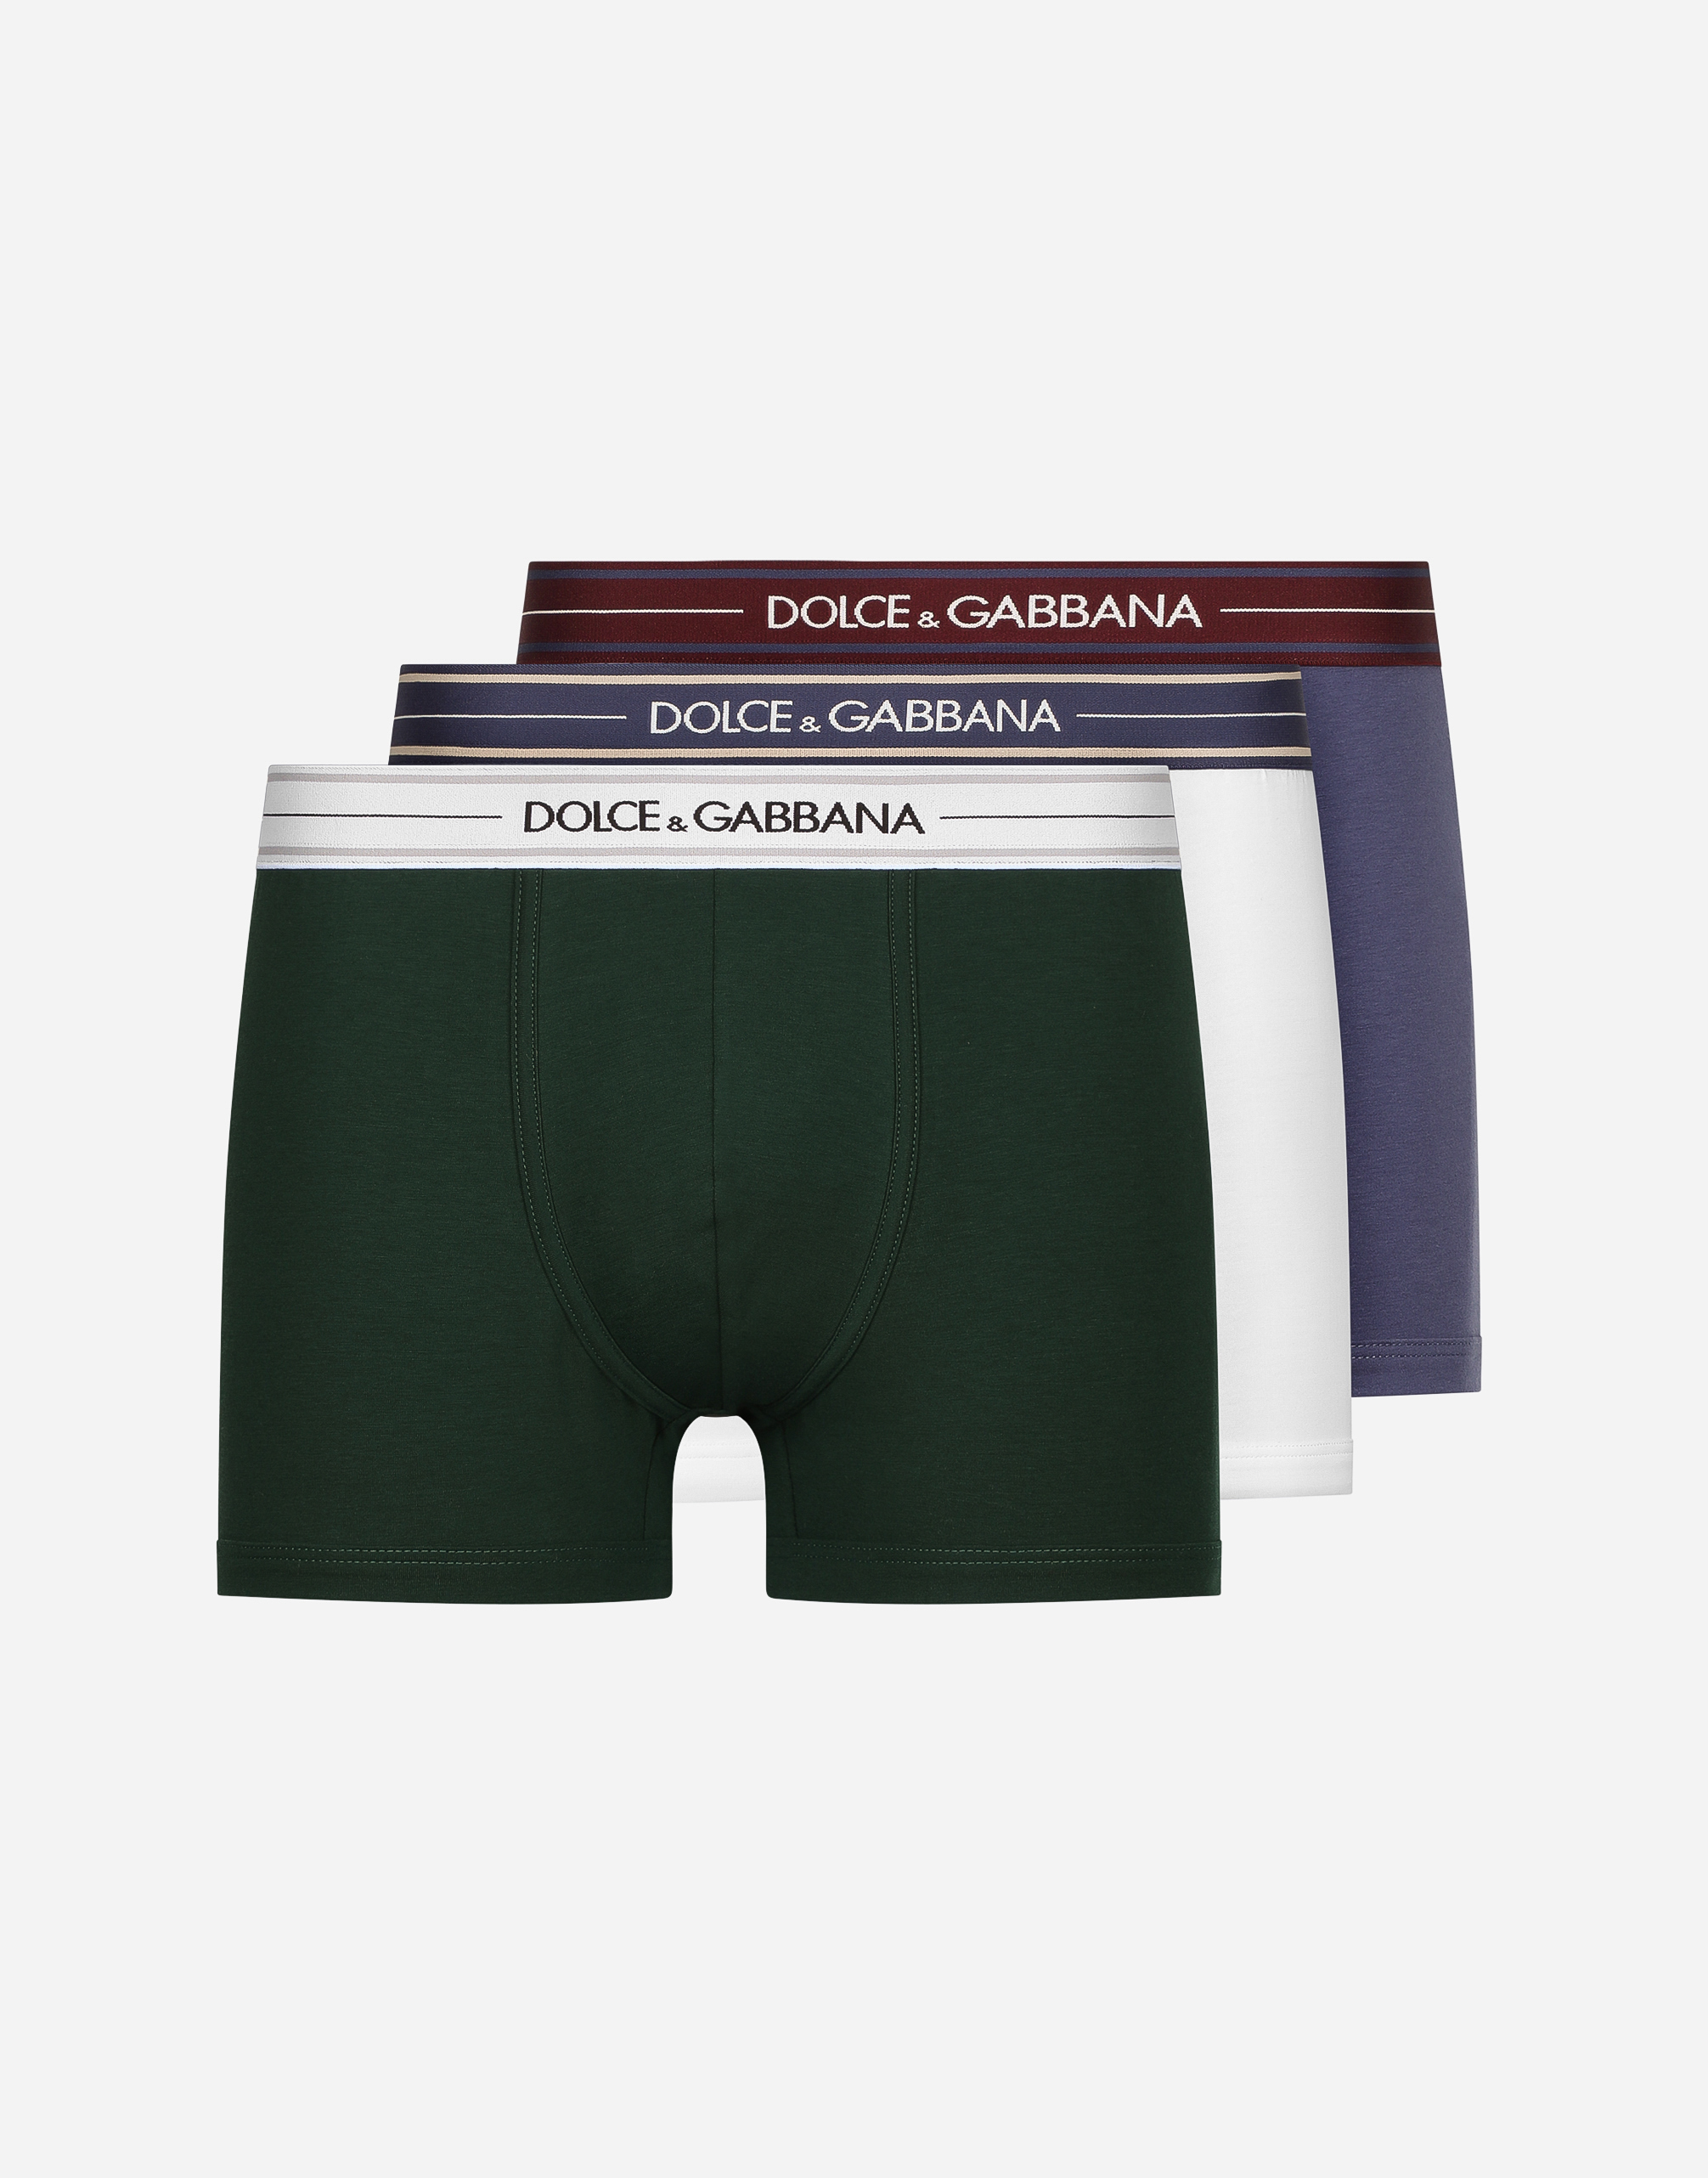 Dolce & Gabbana N80031 O0032 Black, Underwear - Boxers, Fashion